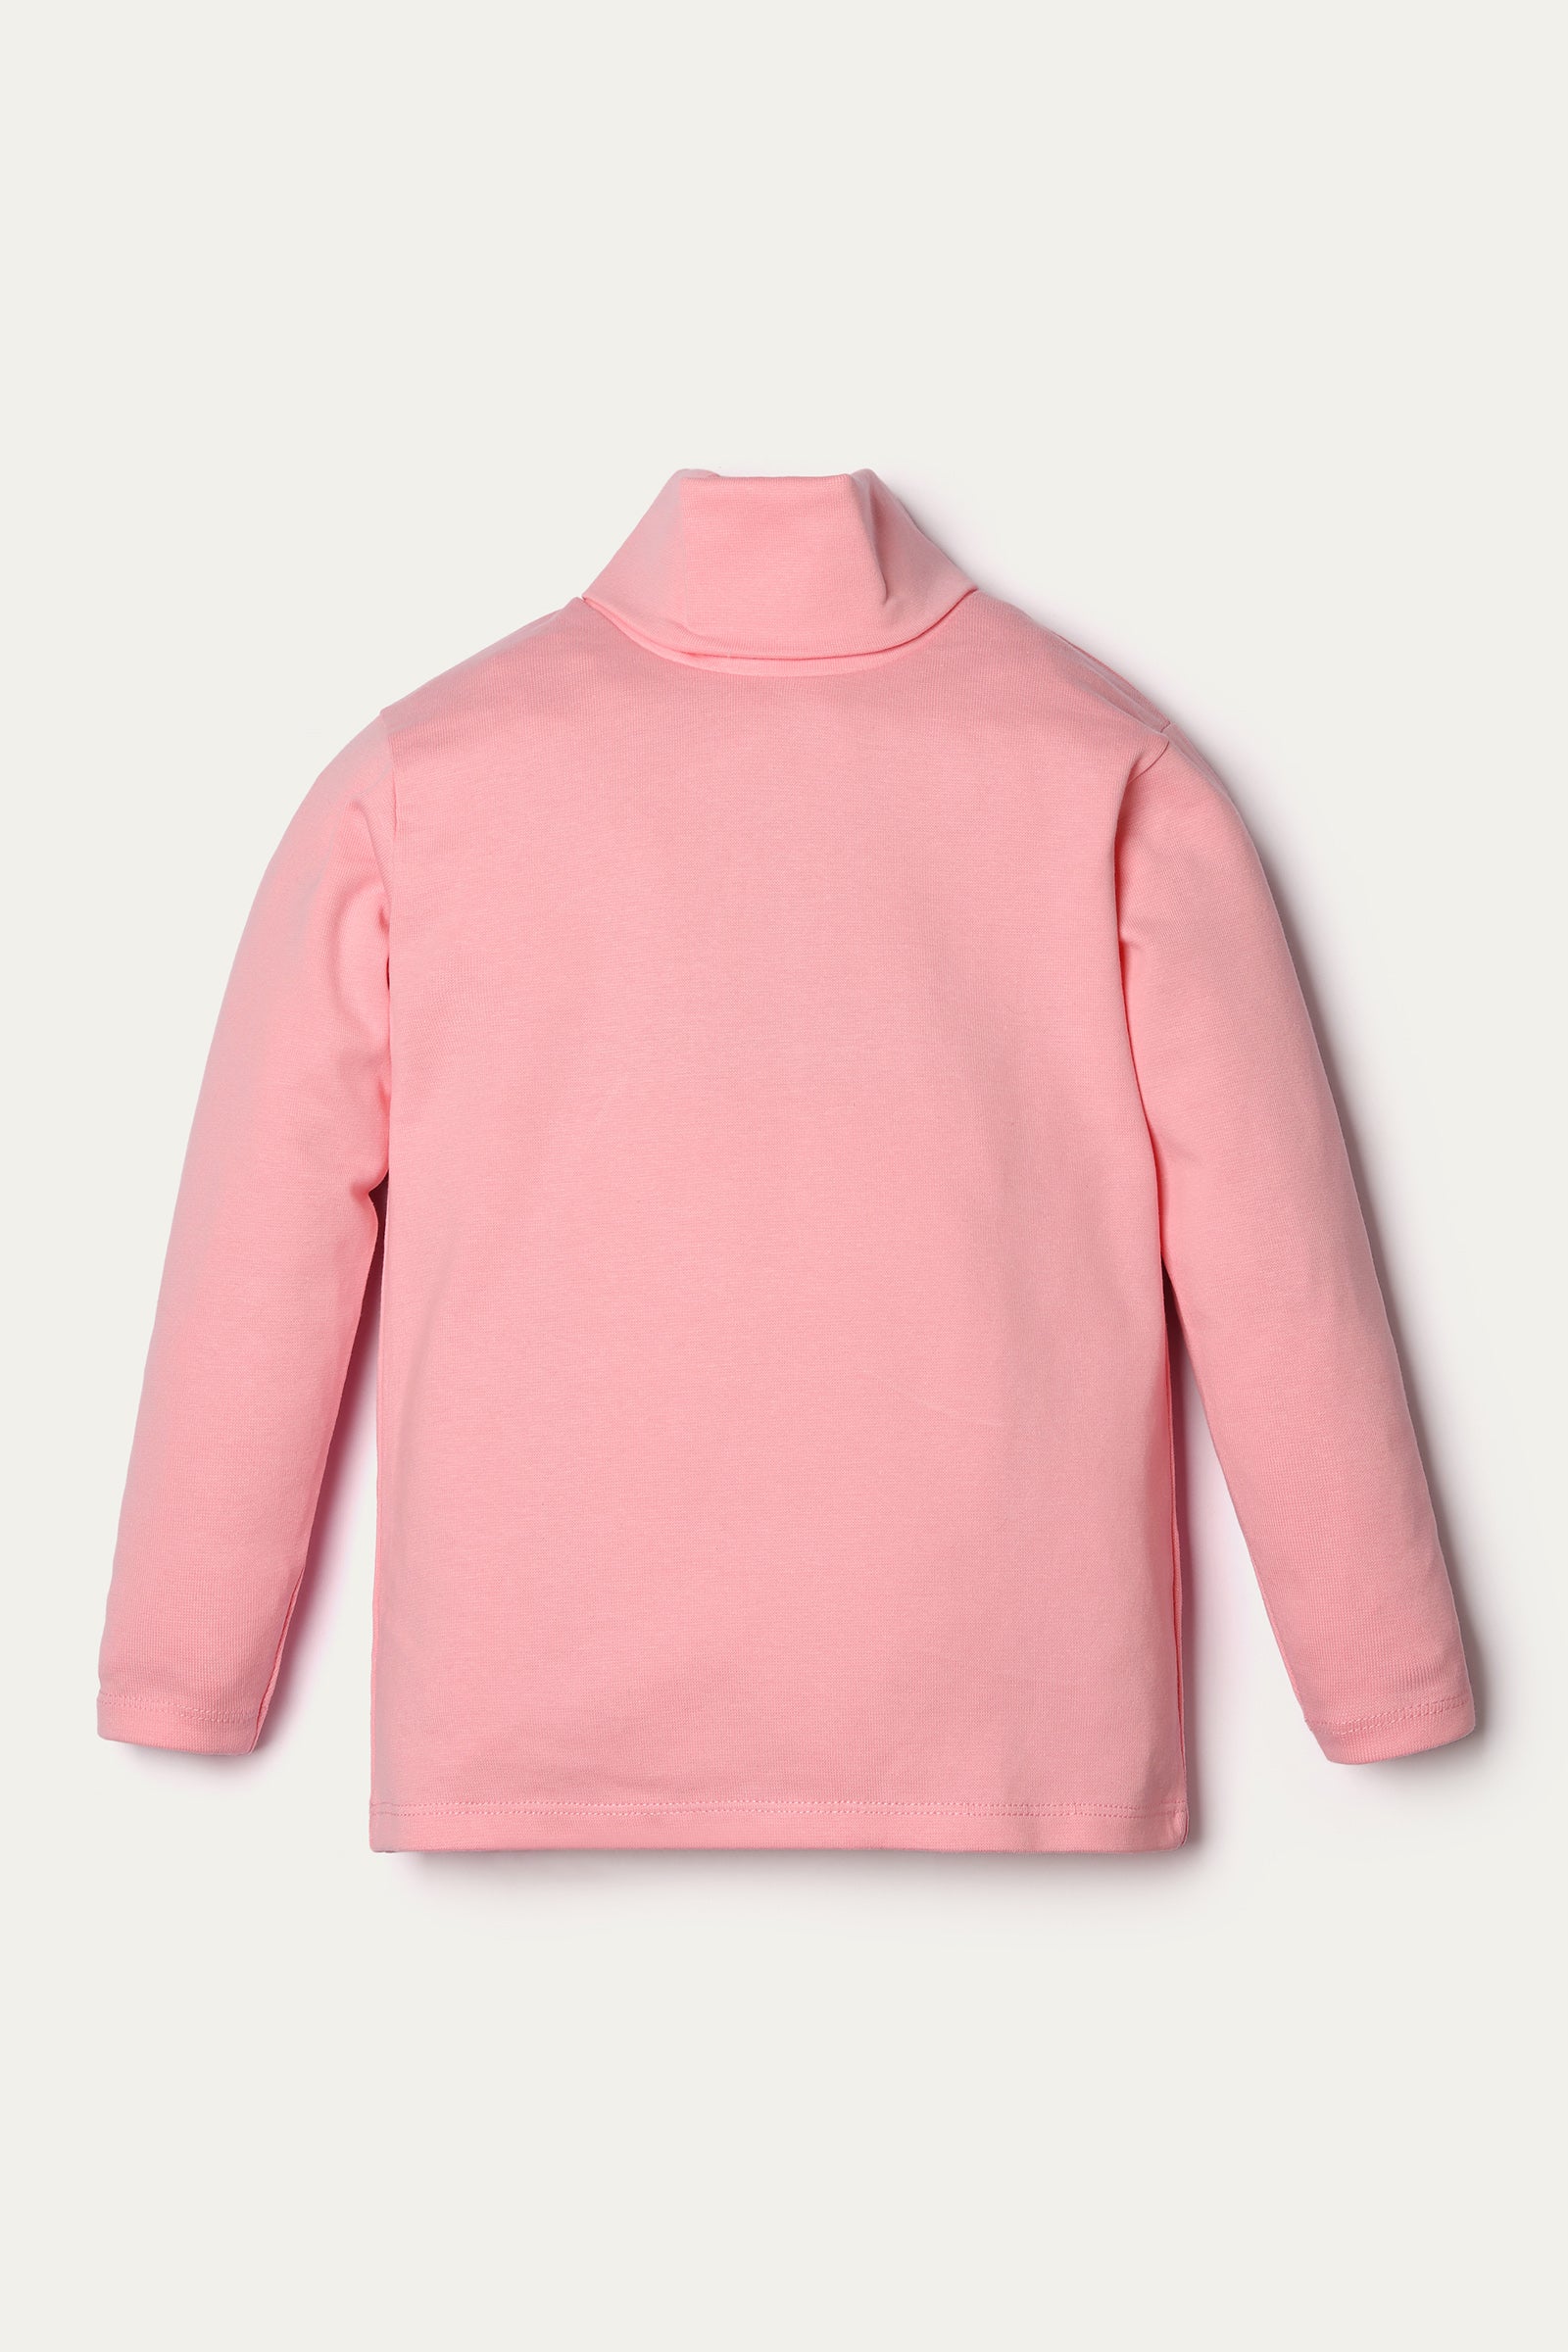 High Neck - Soft Lycra Rib | Baby Pink - Best Kids Clothing Brands In Pakistan Online|Minnie Minors